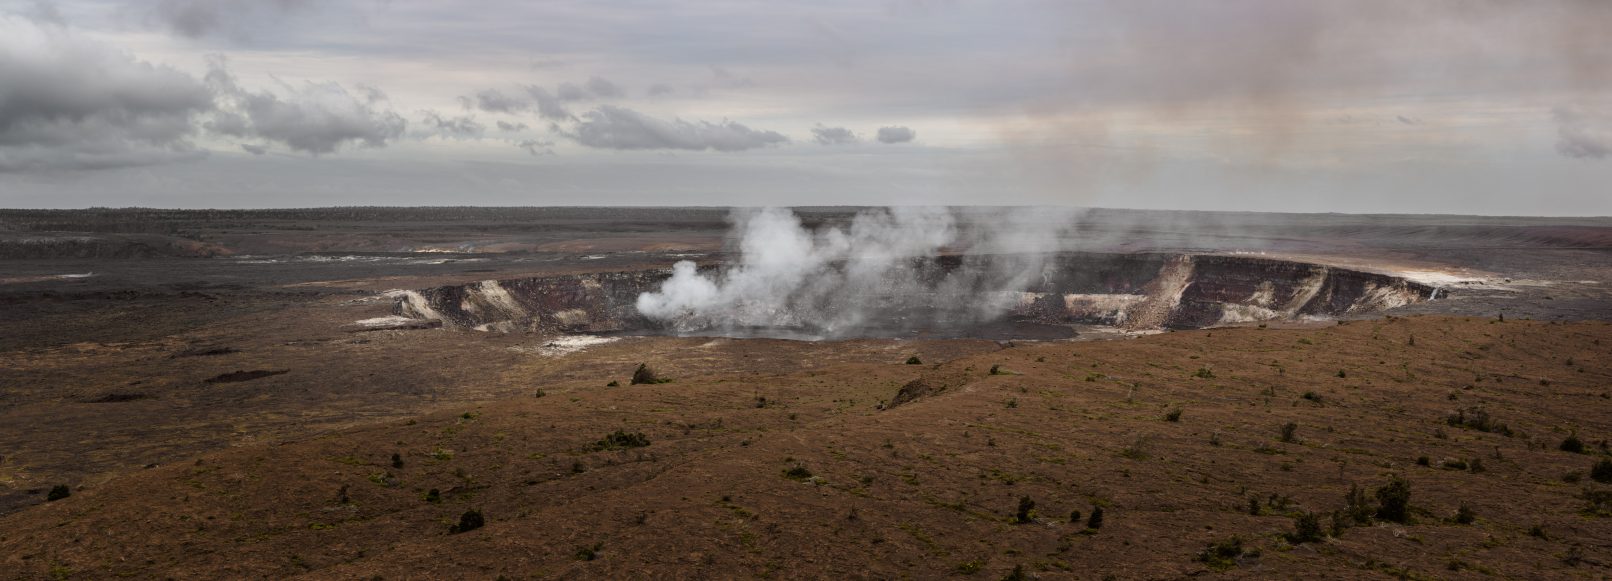 Hawaii, Kilauea crater with smoke